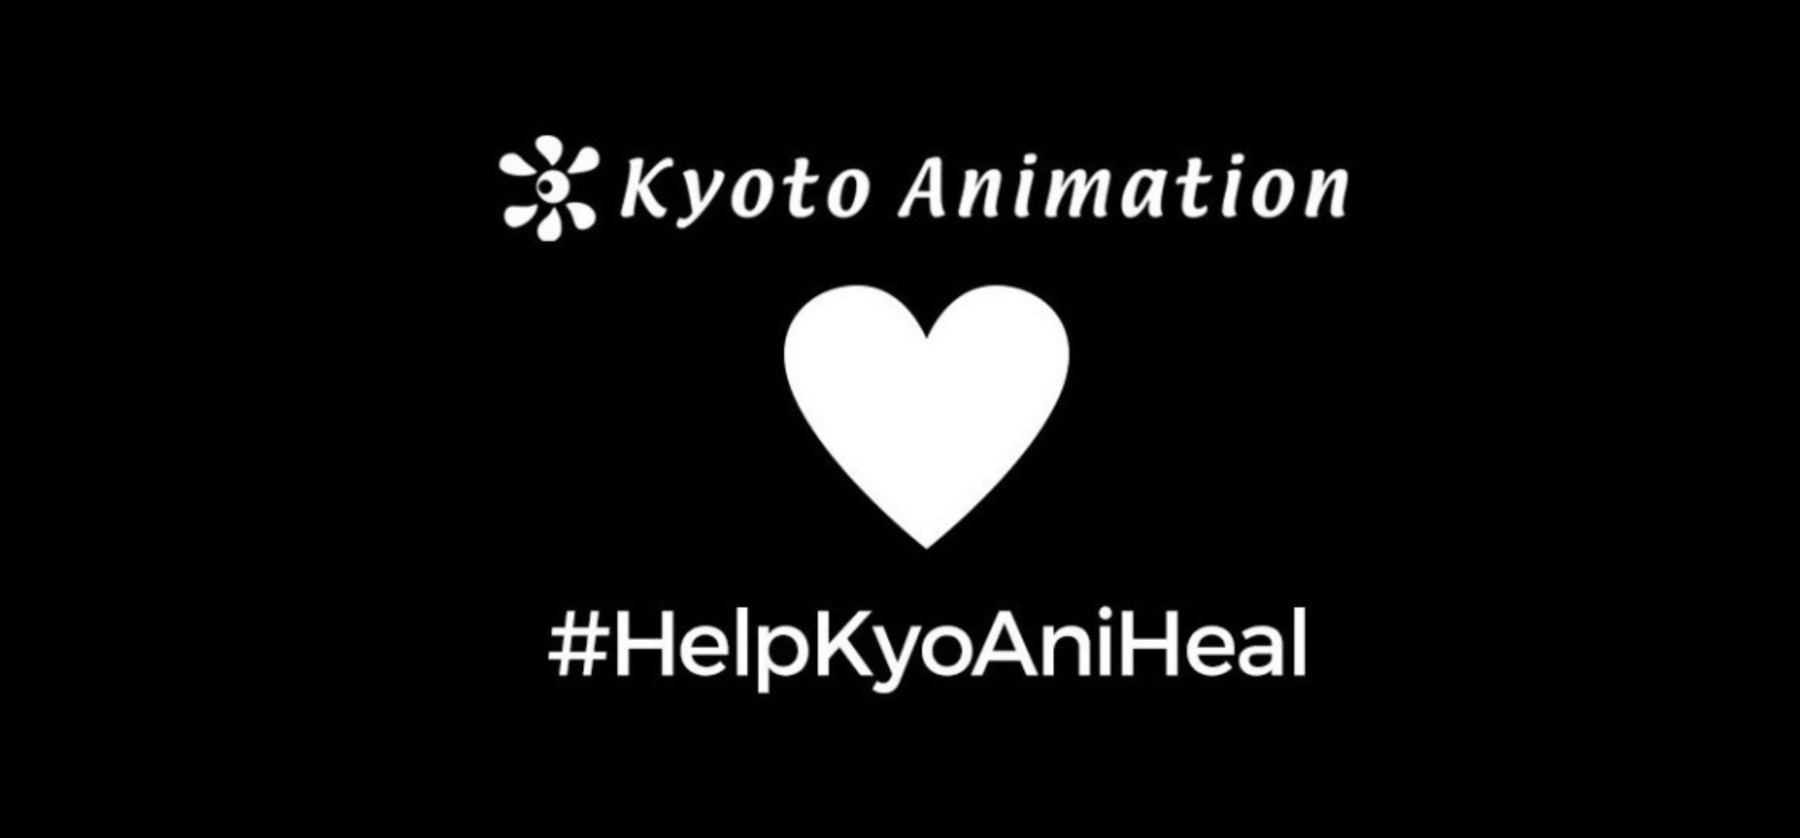 https://www.gofundme.com/help-kyoani-heal